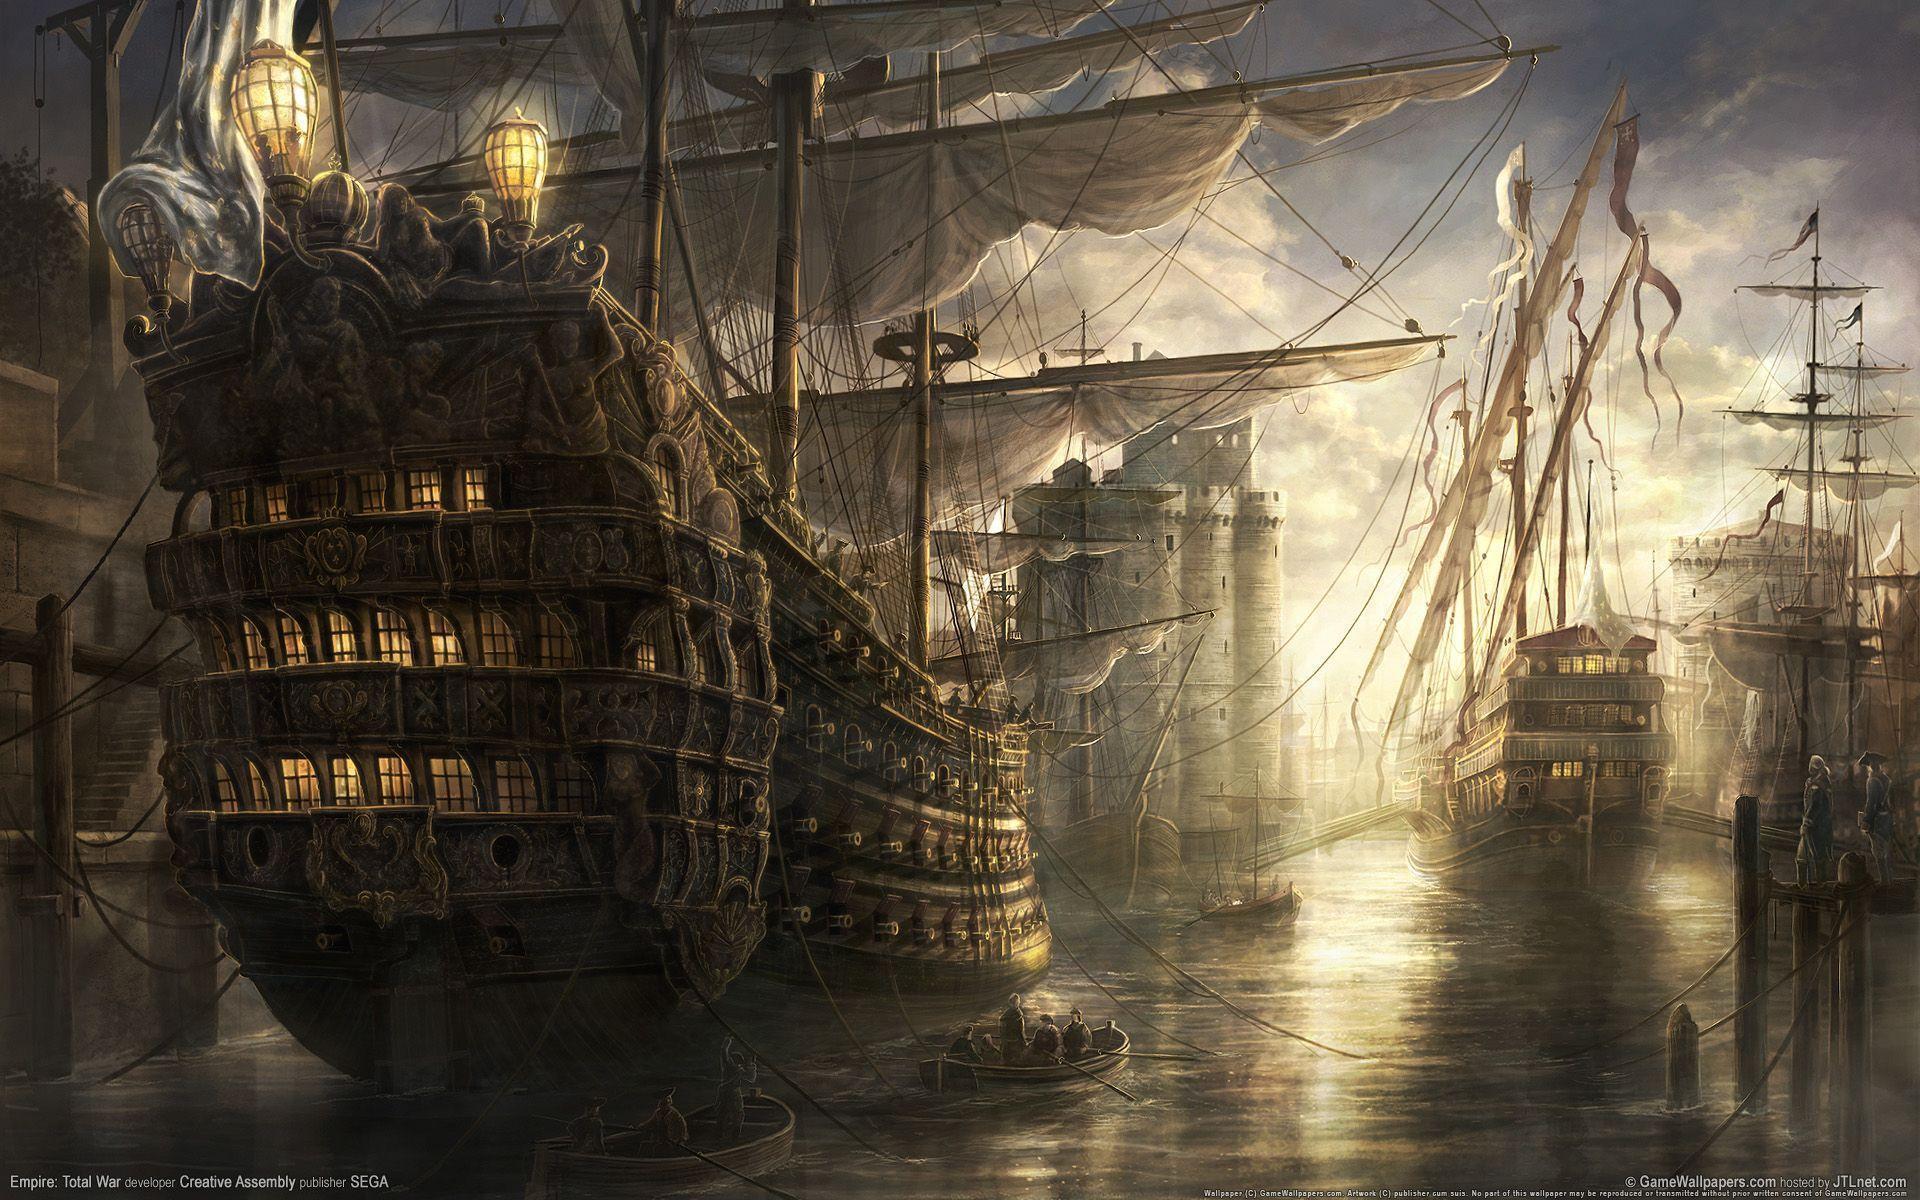 Pirate Ship Artwork